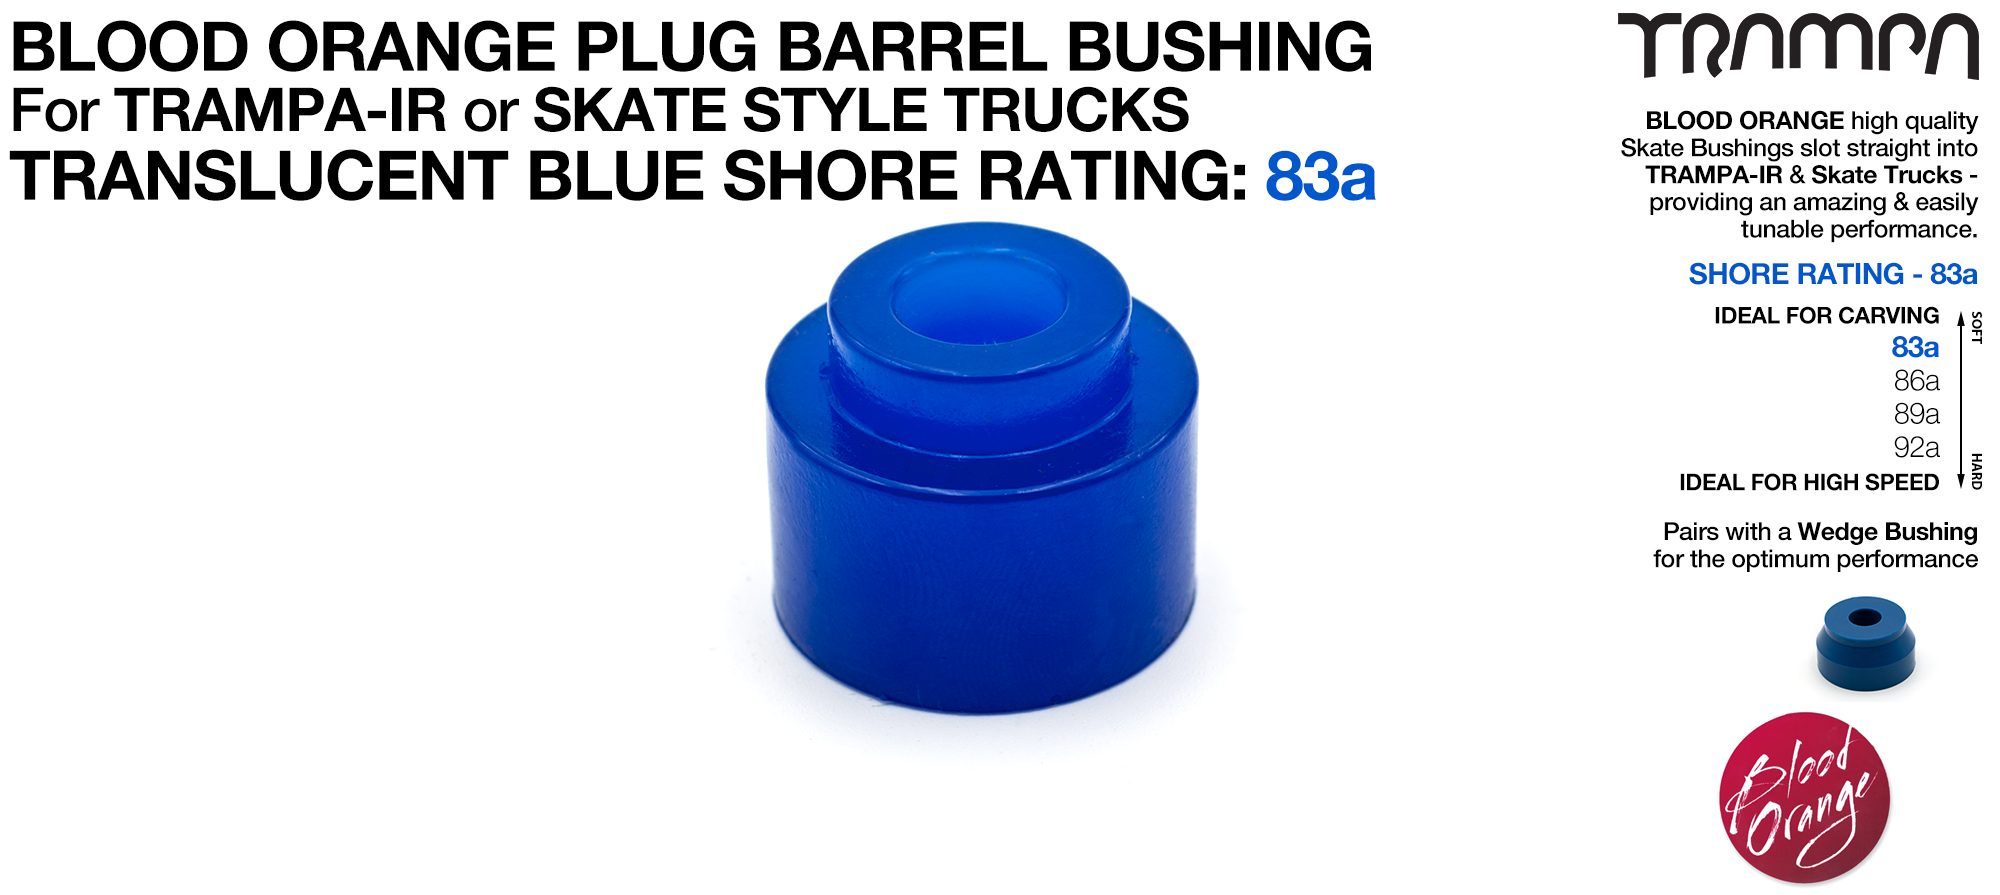 Blood Orange PLUG BARREL - TRANSLUCENT BLUE 89a